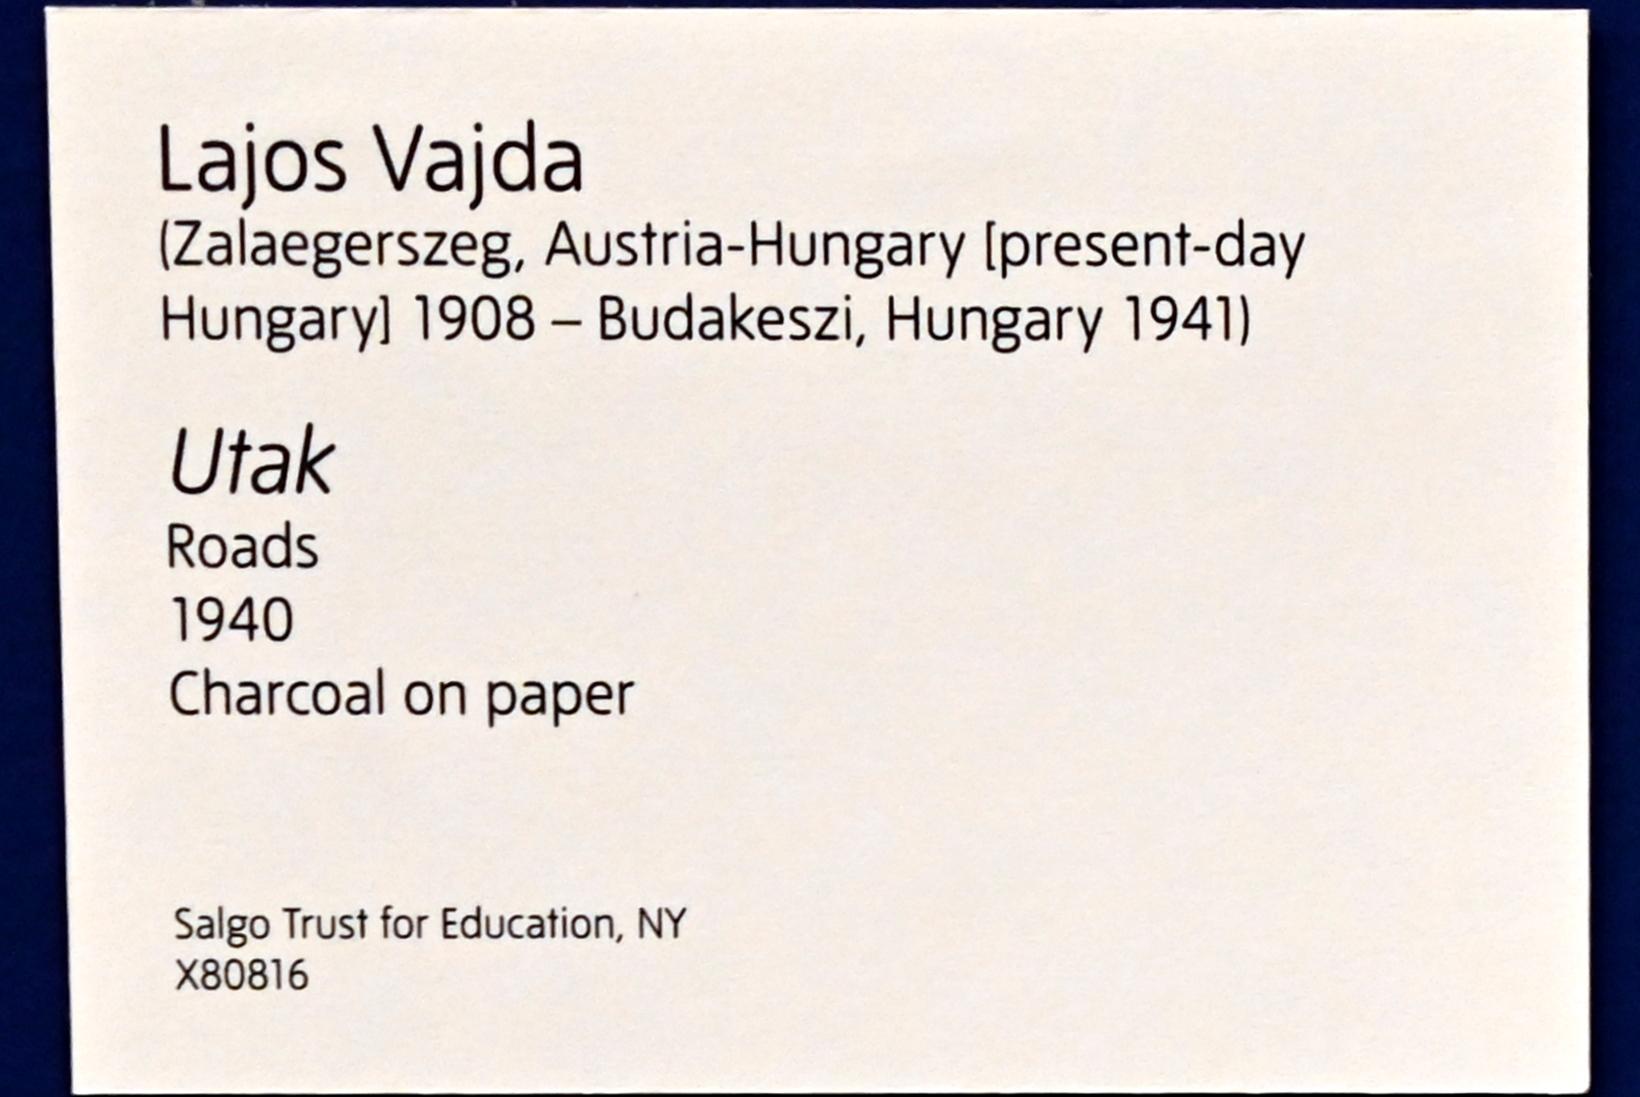 Lajos Vajda (1940), Straßen, London, Tate Modern, Ausstellung "Surrealism Beyond Borders" vom 24.02.-29.08.2022, Saal 11, 1940, Bild 2/3